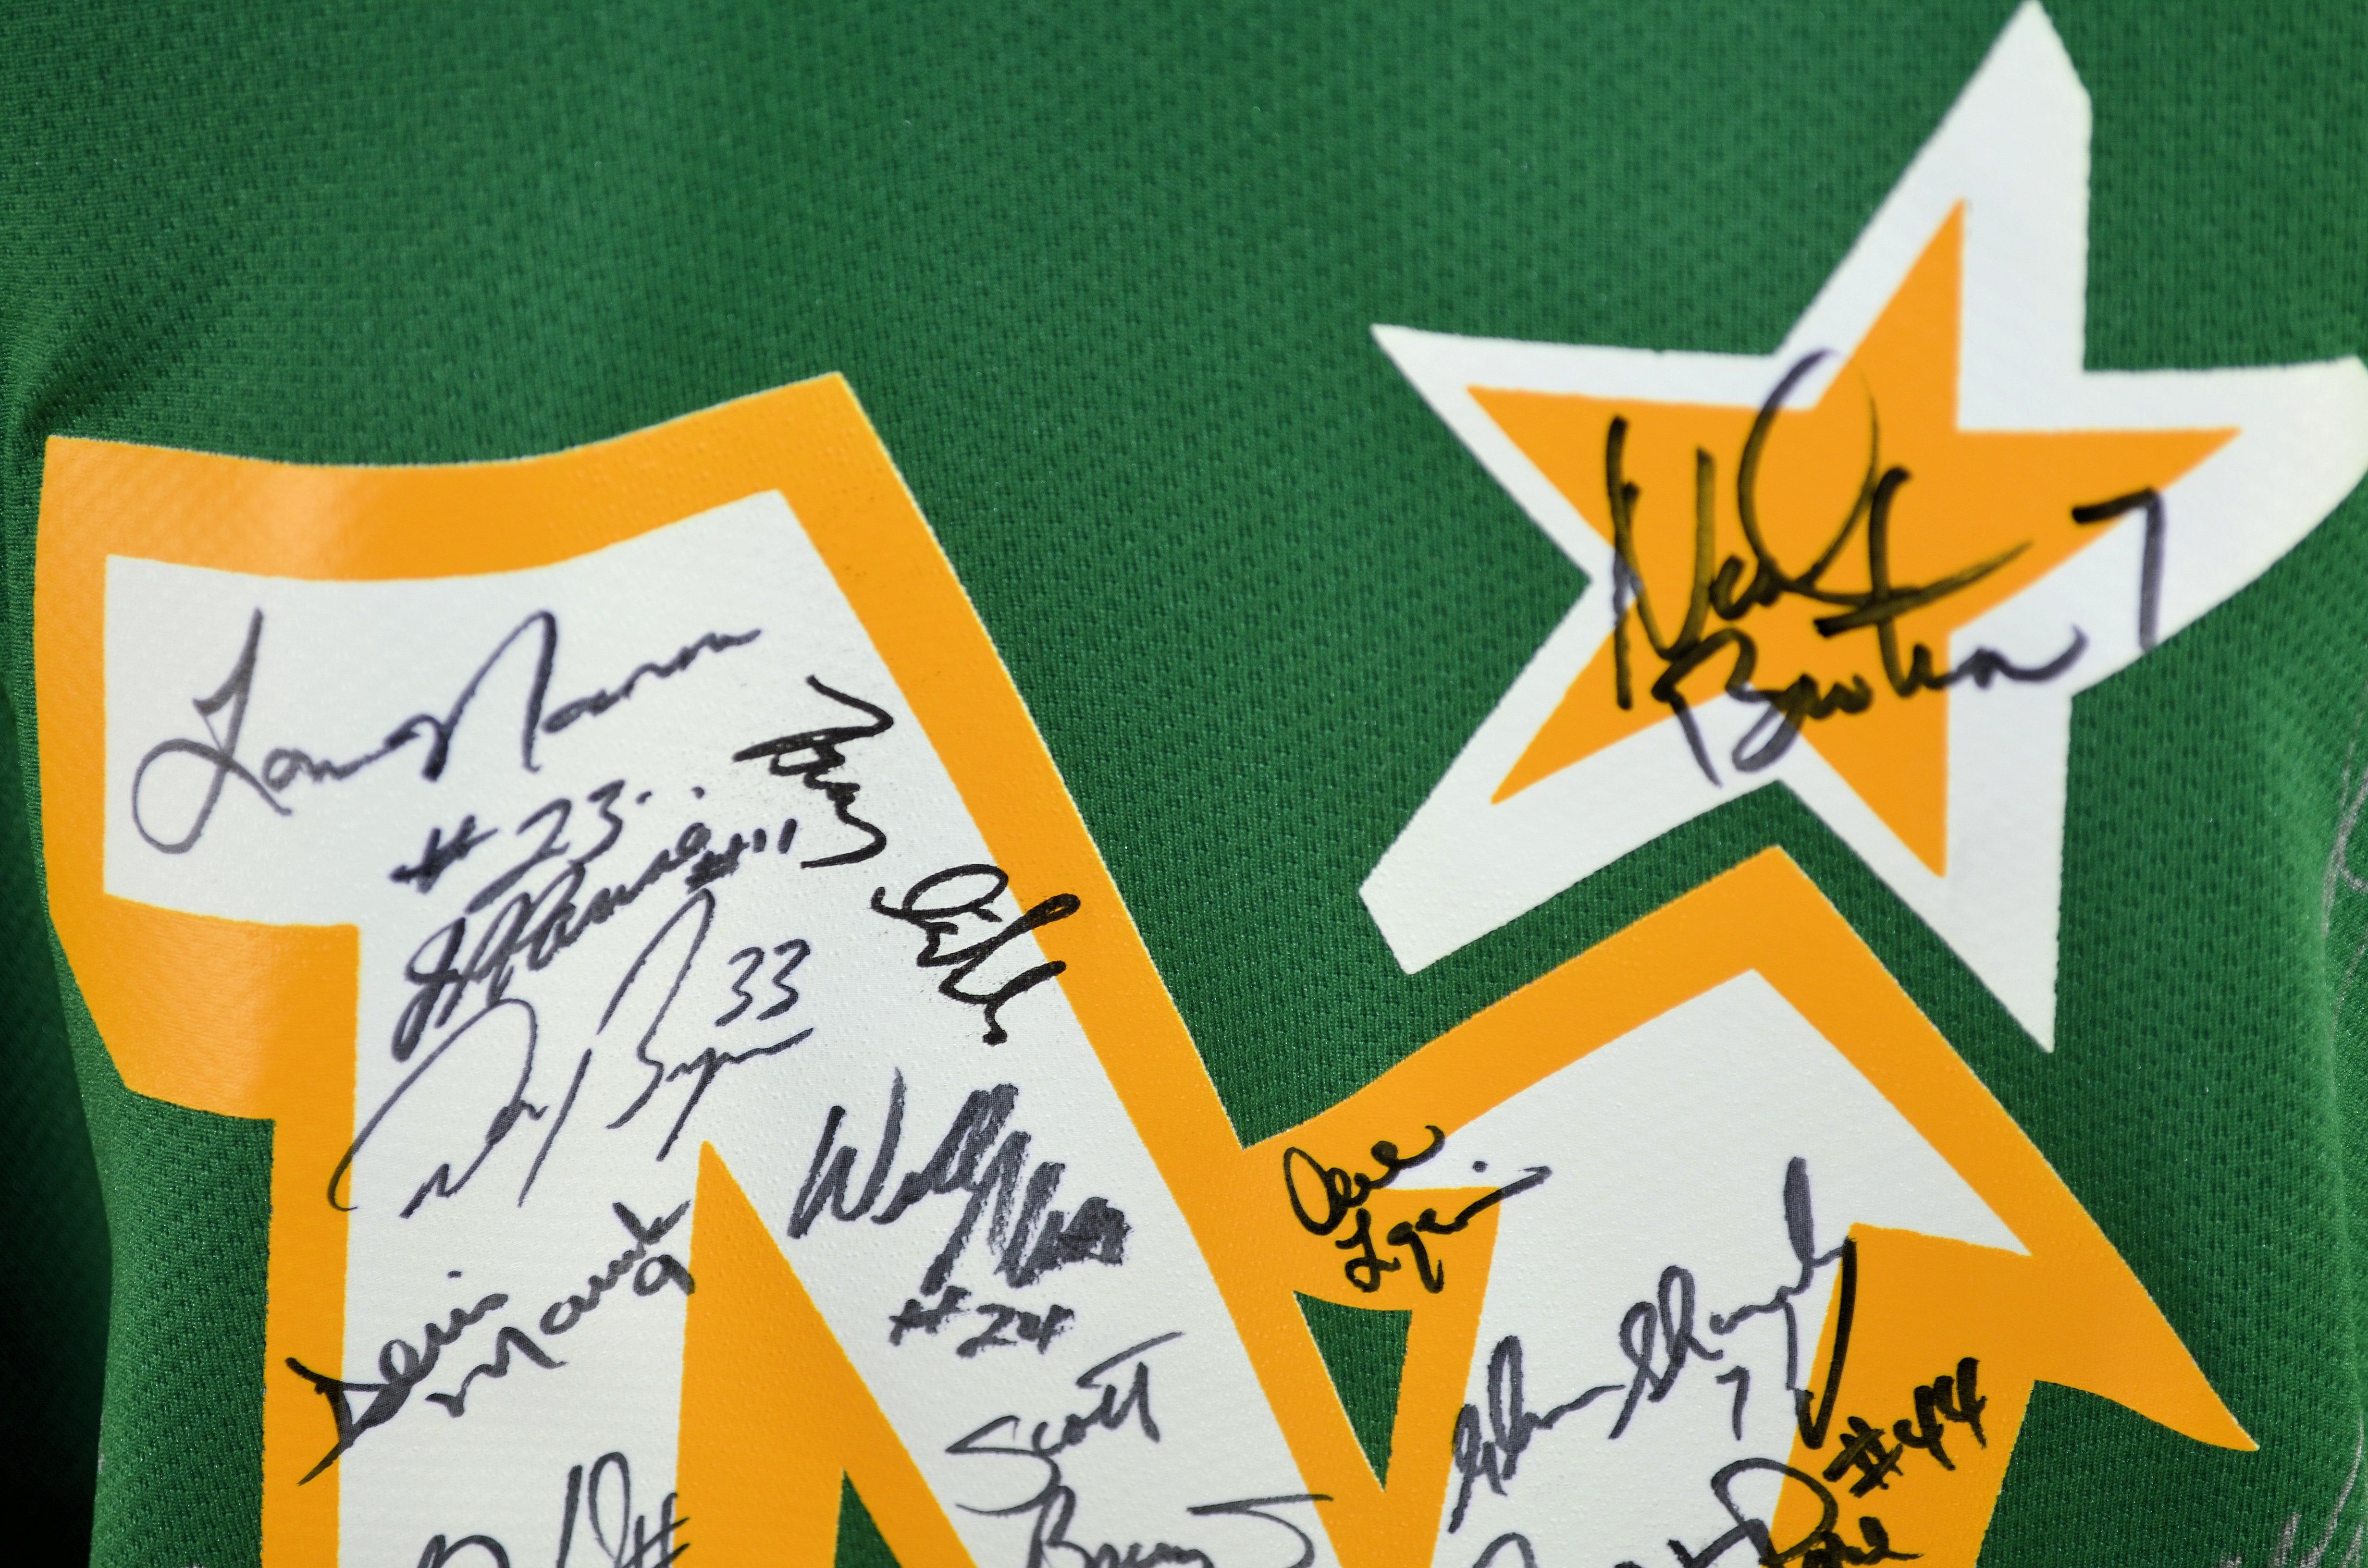 Lot Detail - Minnesota North Stars Legends Signed Jersey w/30